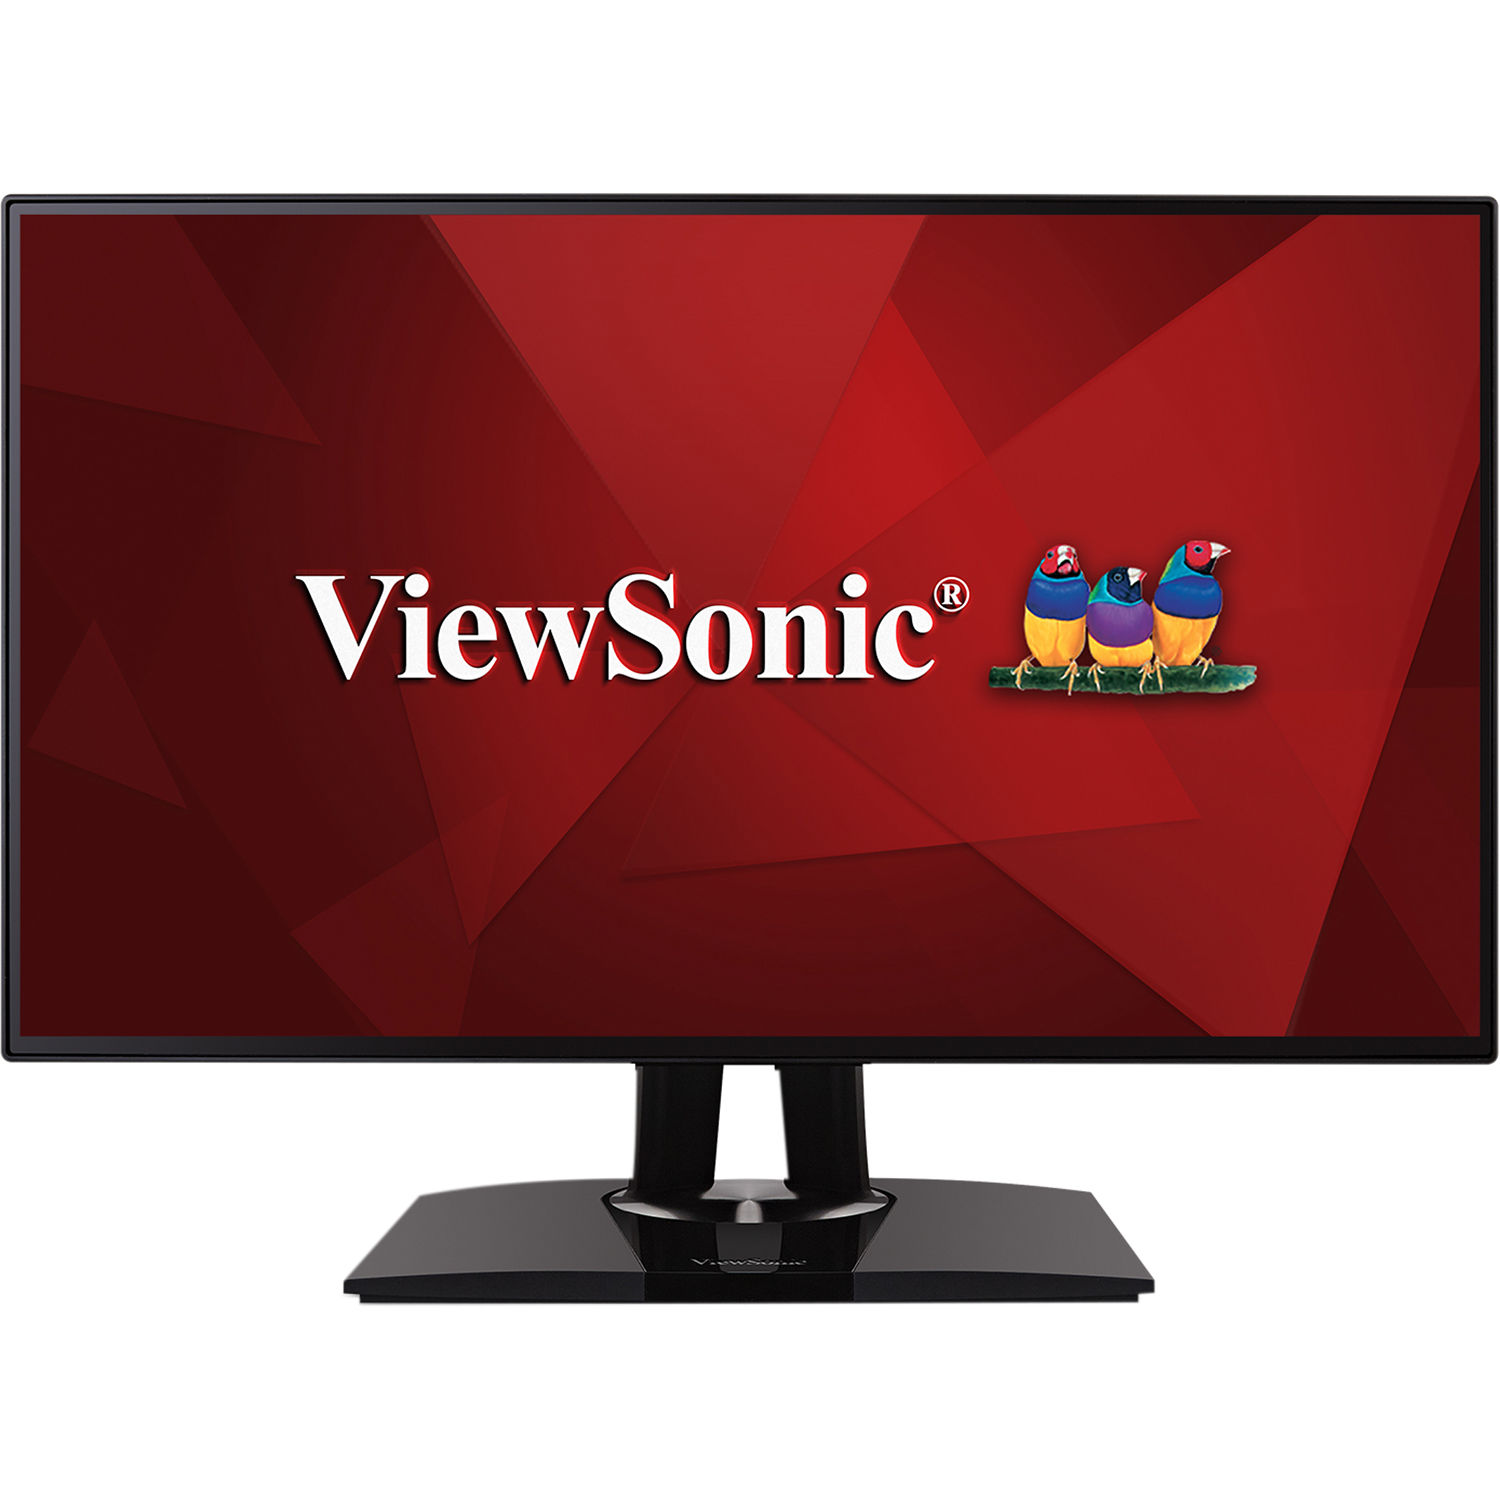 ViewSonic VP2768 - 3 monitor setup